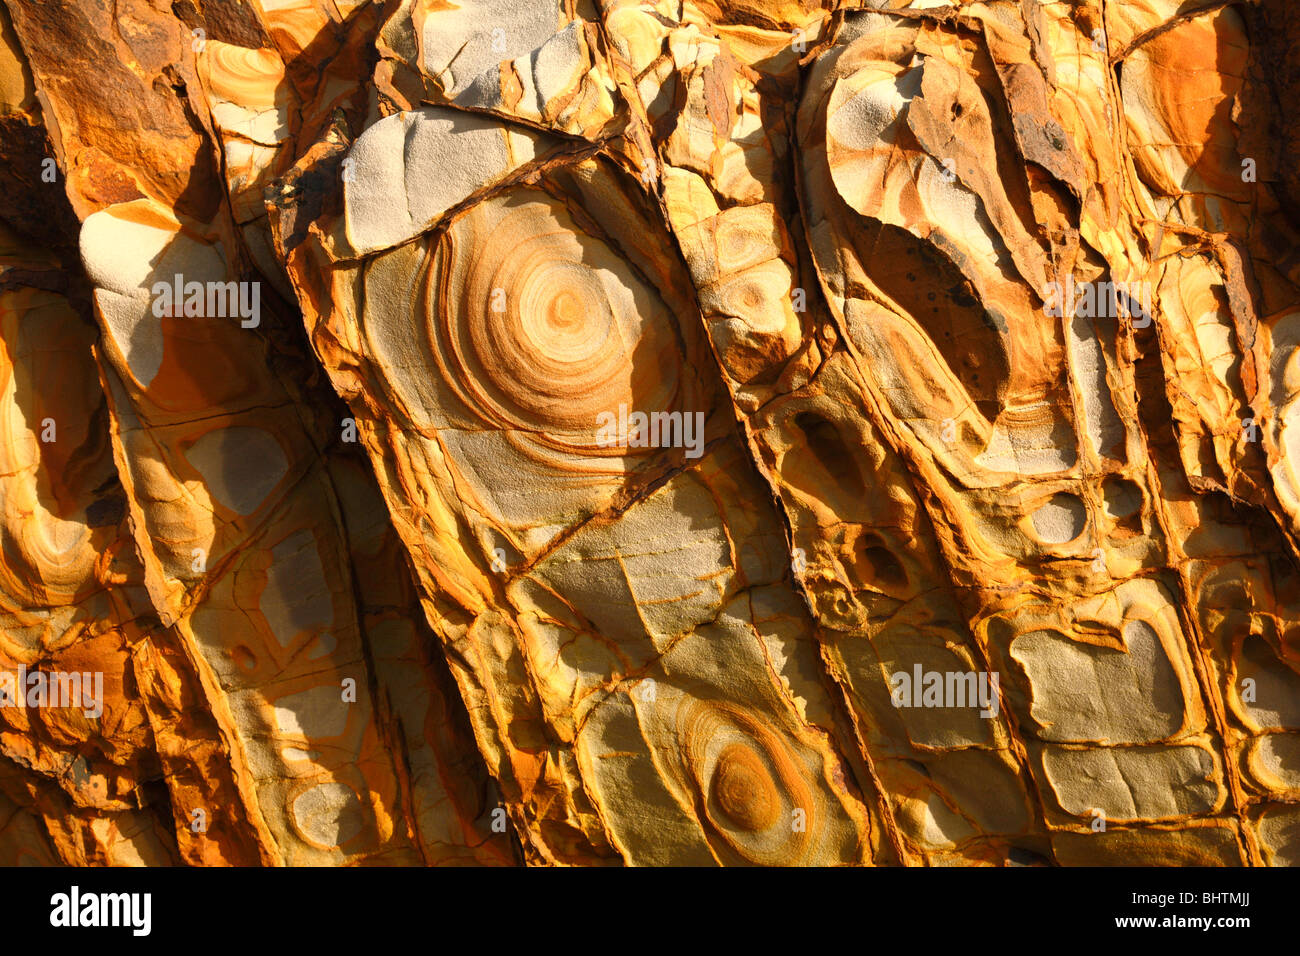 Formations rocheuses en grès sédimentaire Widemouth Bay, Cornwall, Angleterre du Sud-Ouest, Royaume-Uni Banque D'Images